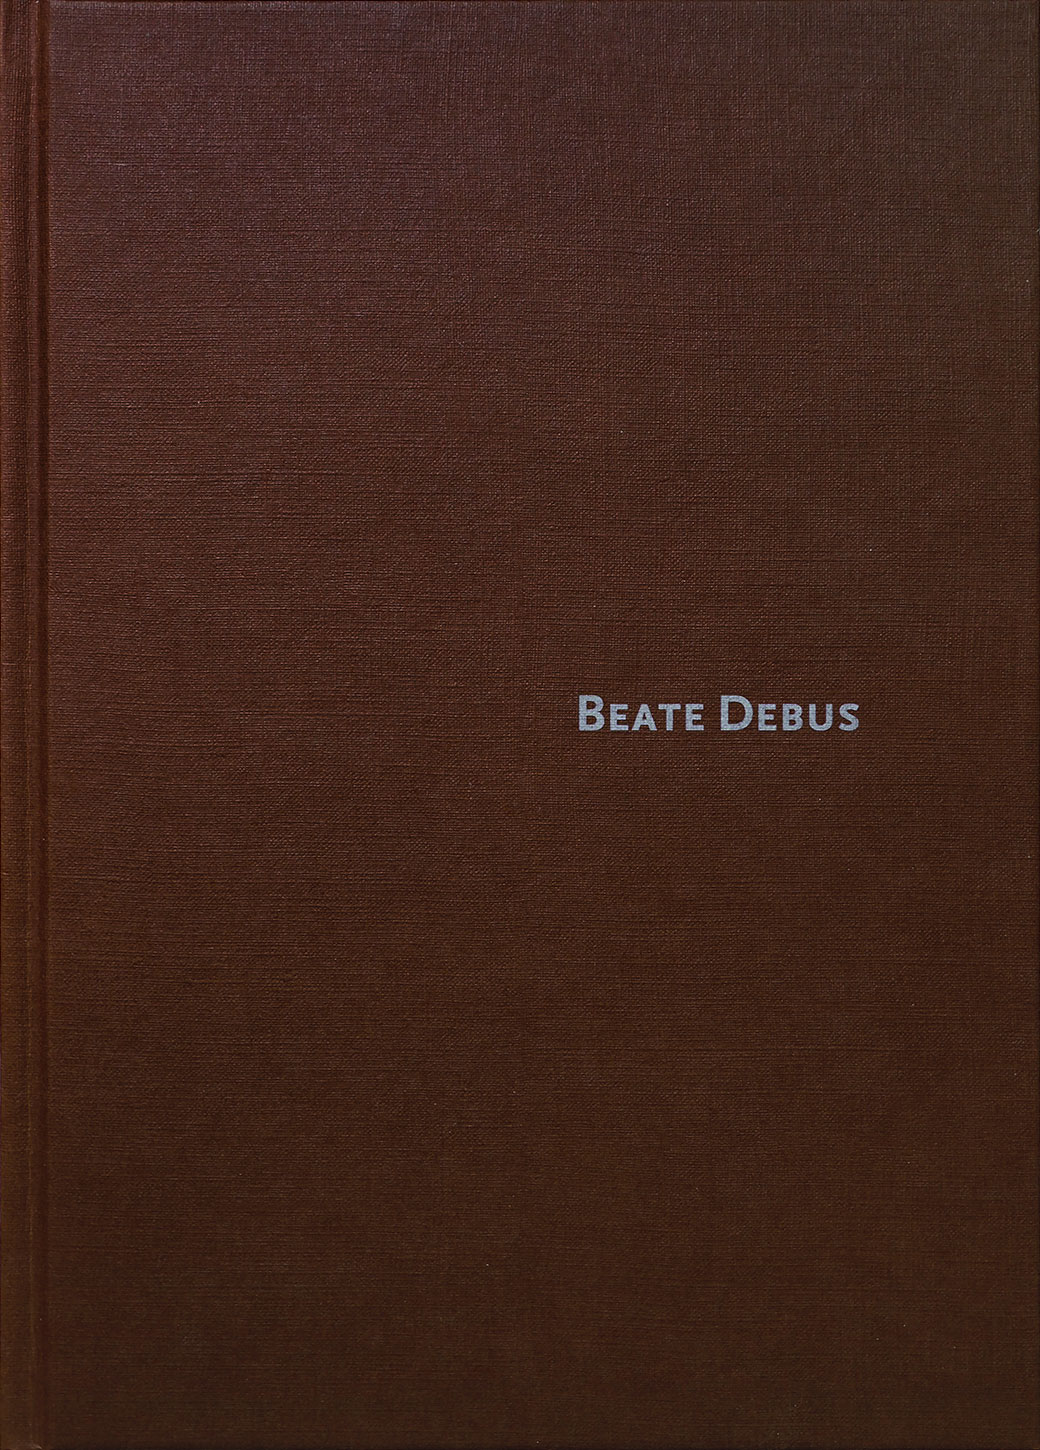 Katalog "Beate Debus" . Skulptur Relief Zeichnung Grafik . 2008 (Gestaltung: Hajo Schüler)